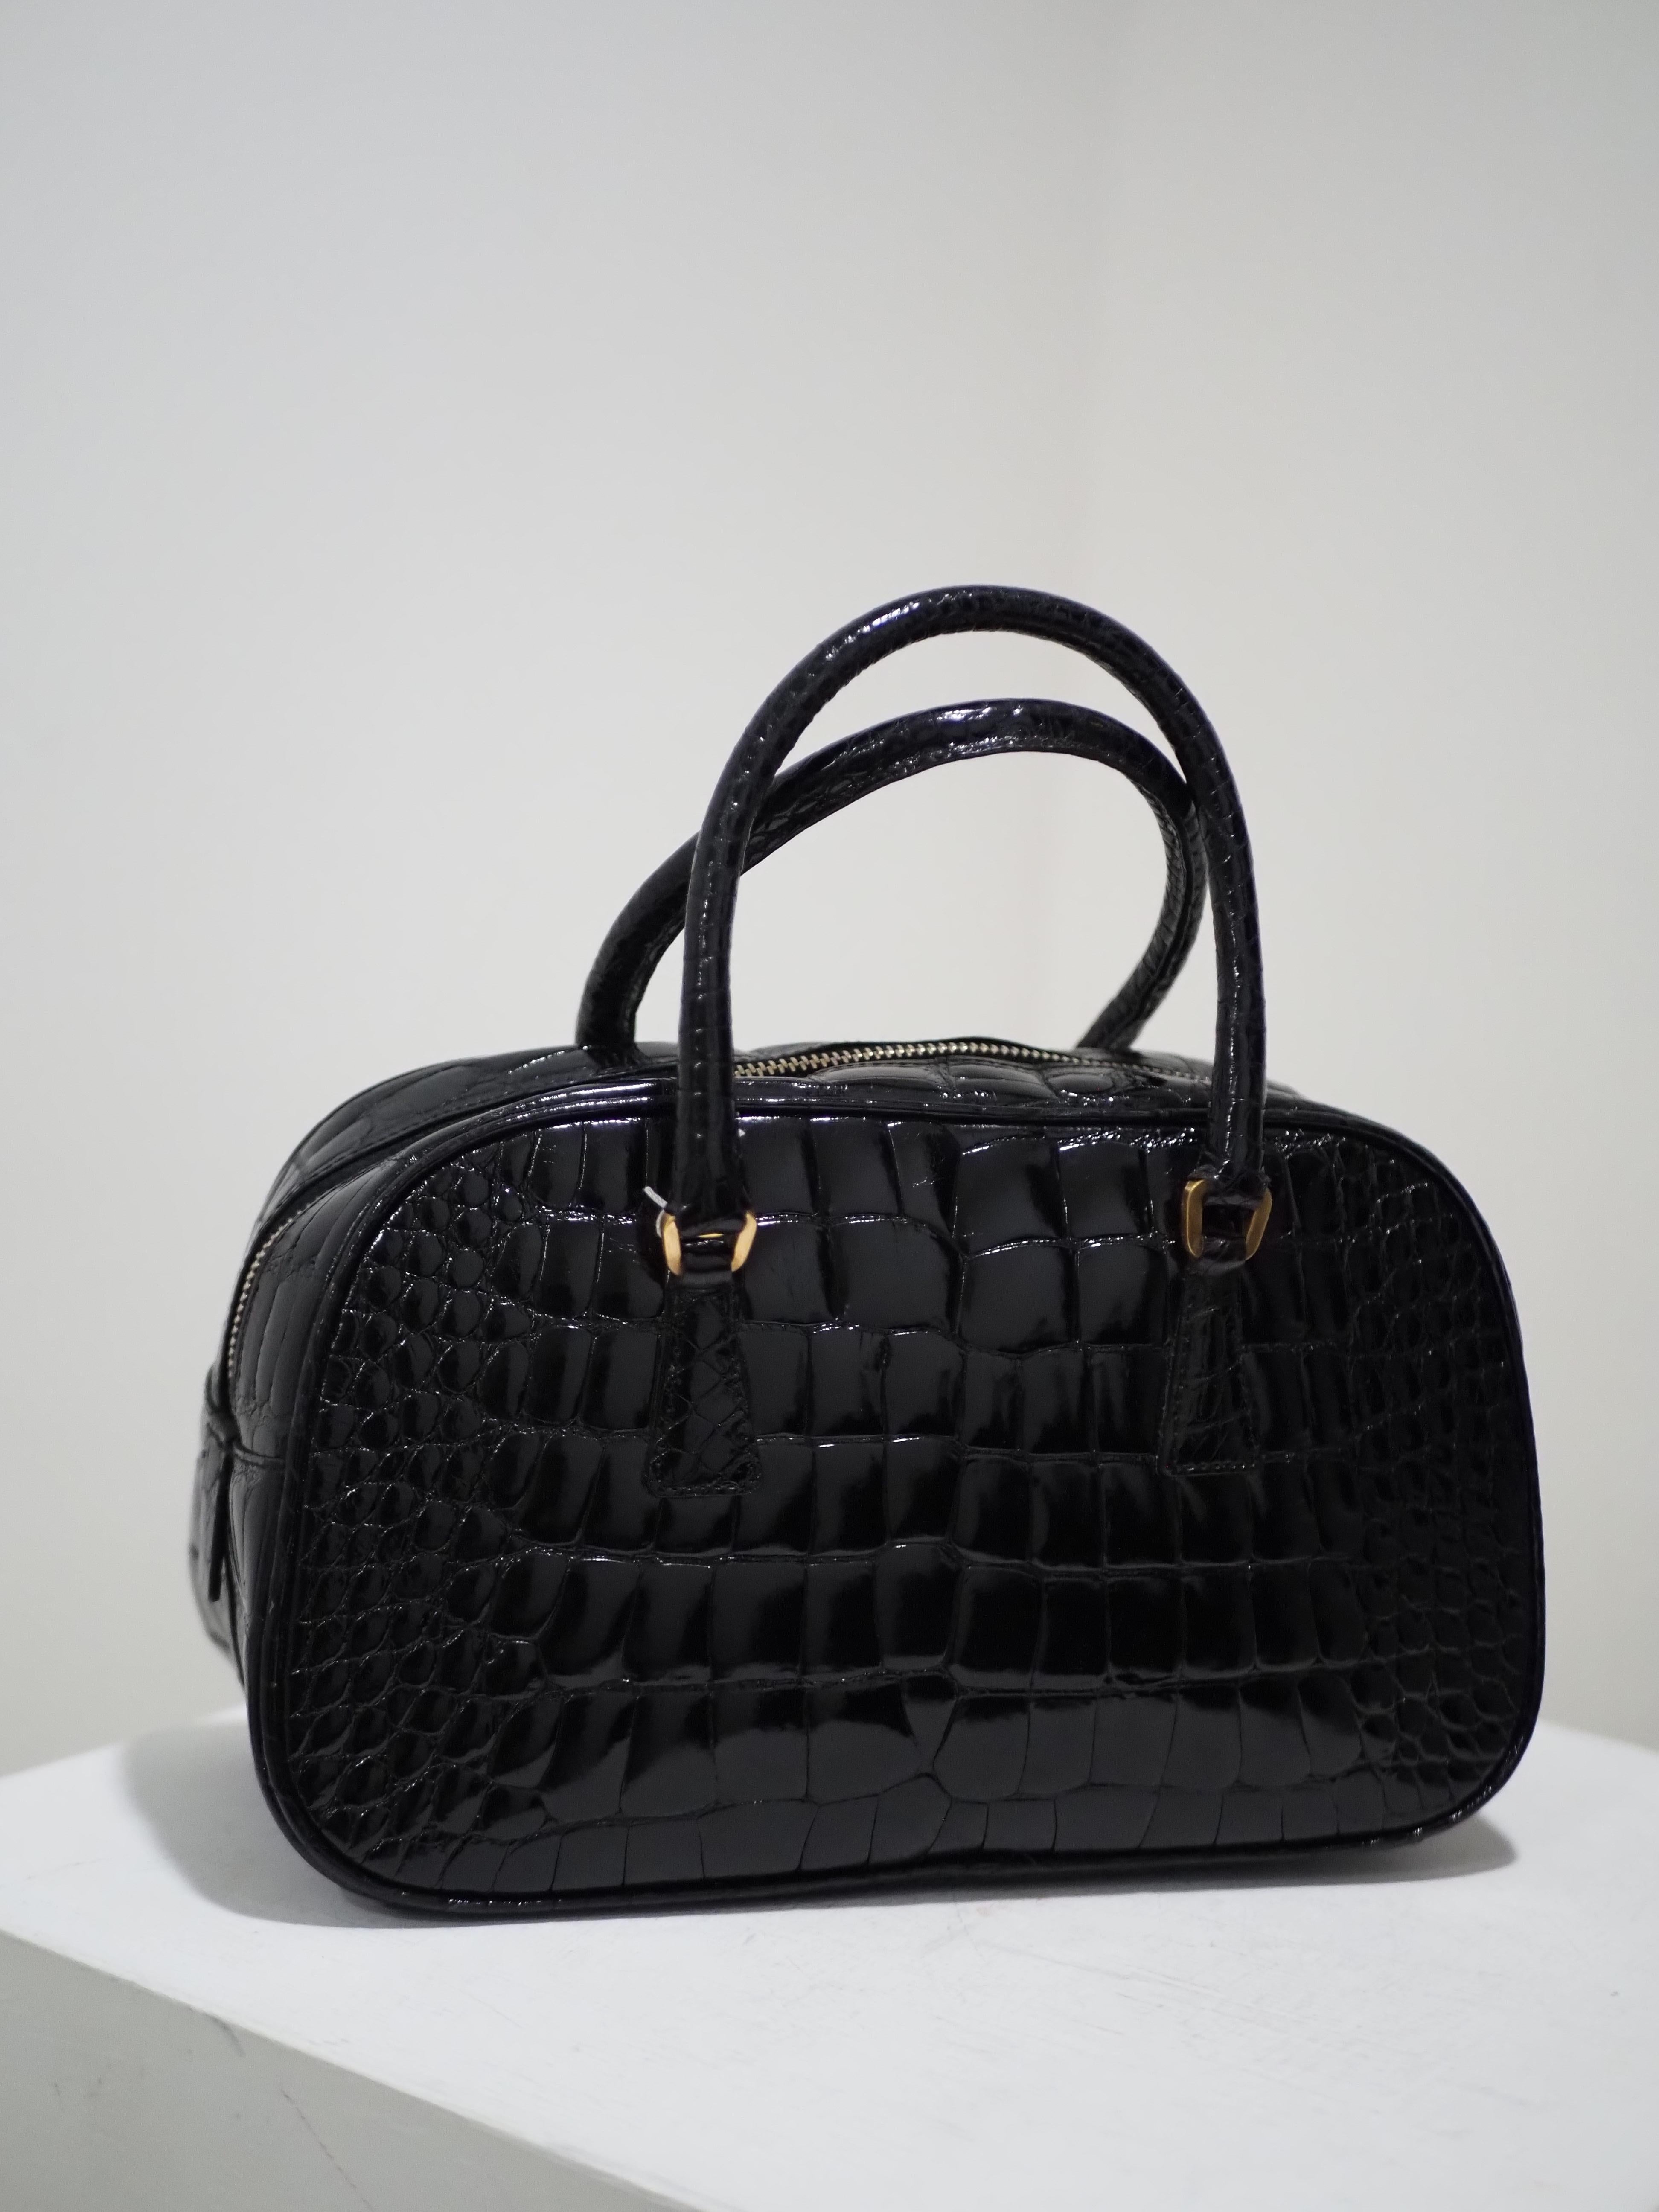 Prada black croco leather handbag shoulder bag For Sale 6